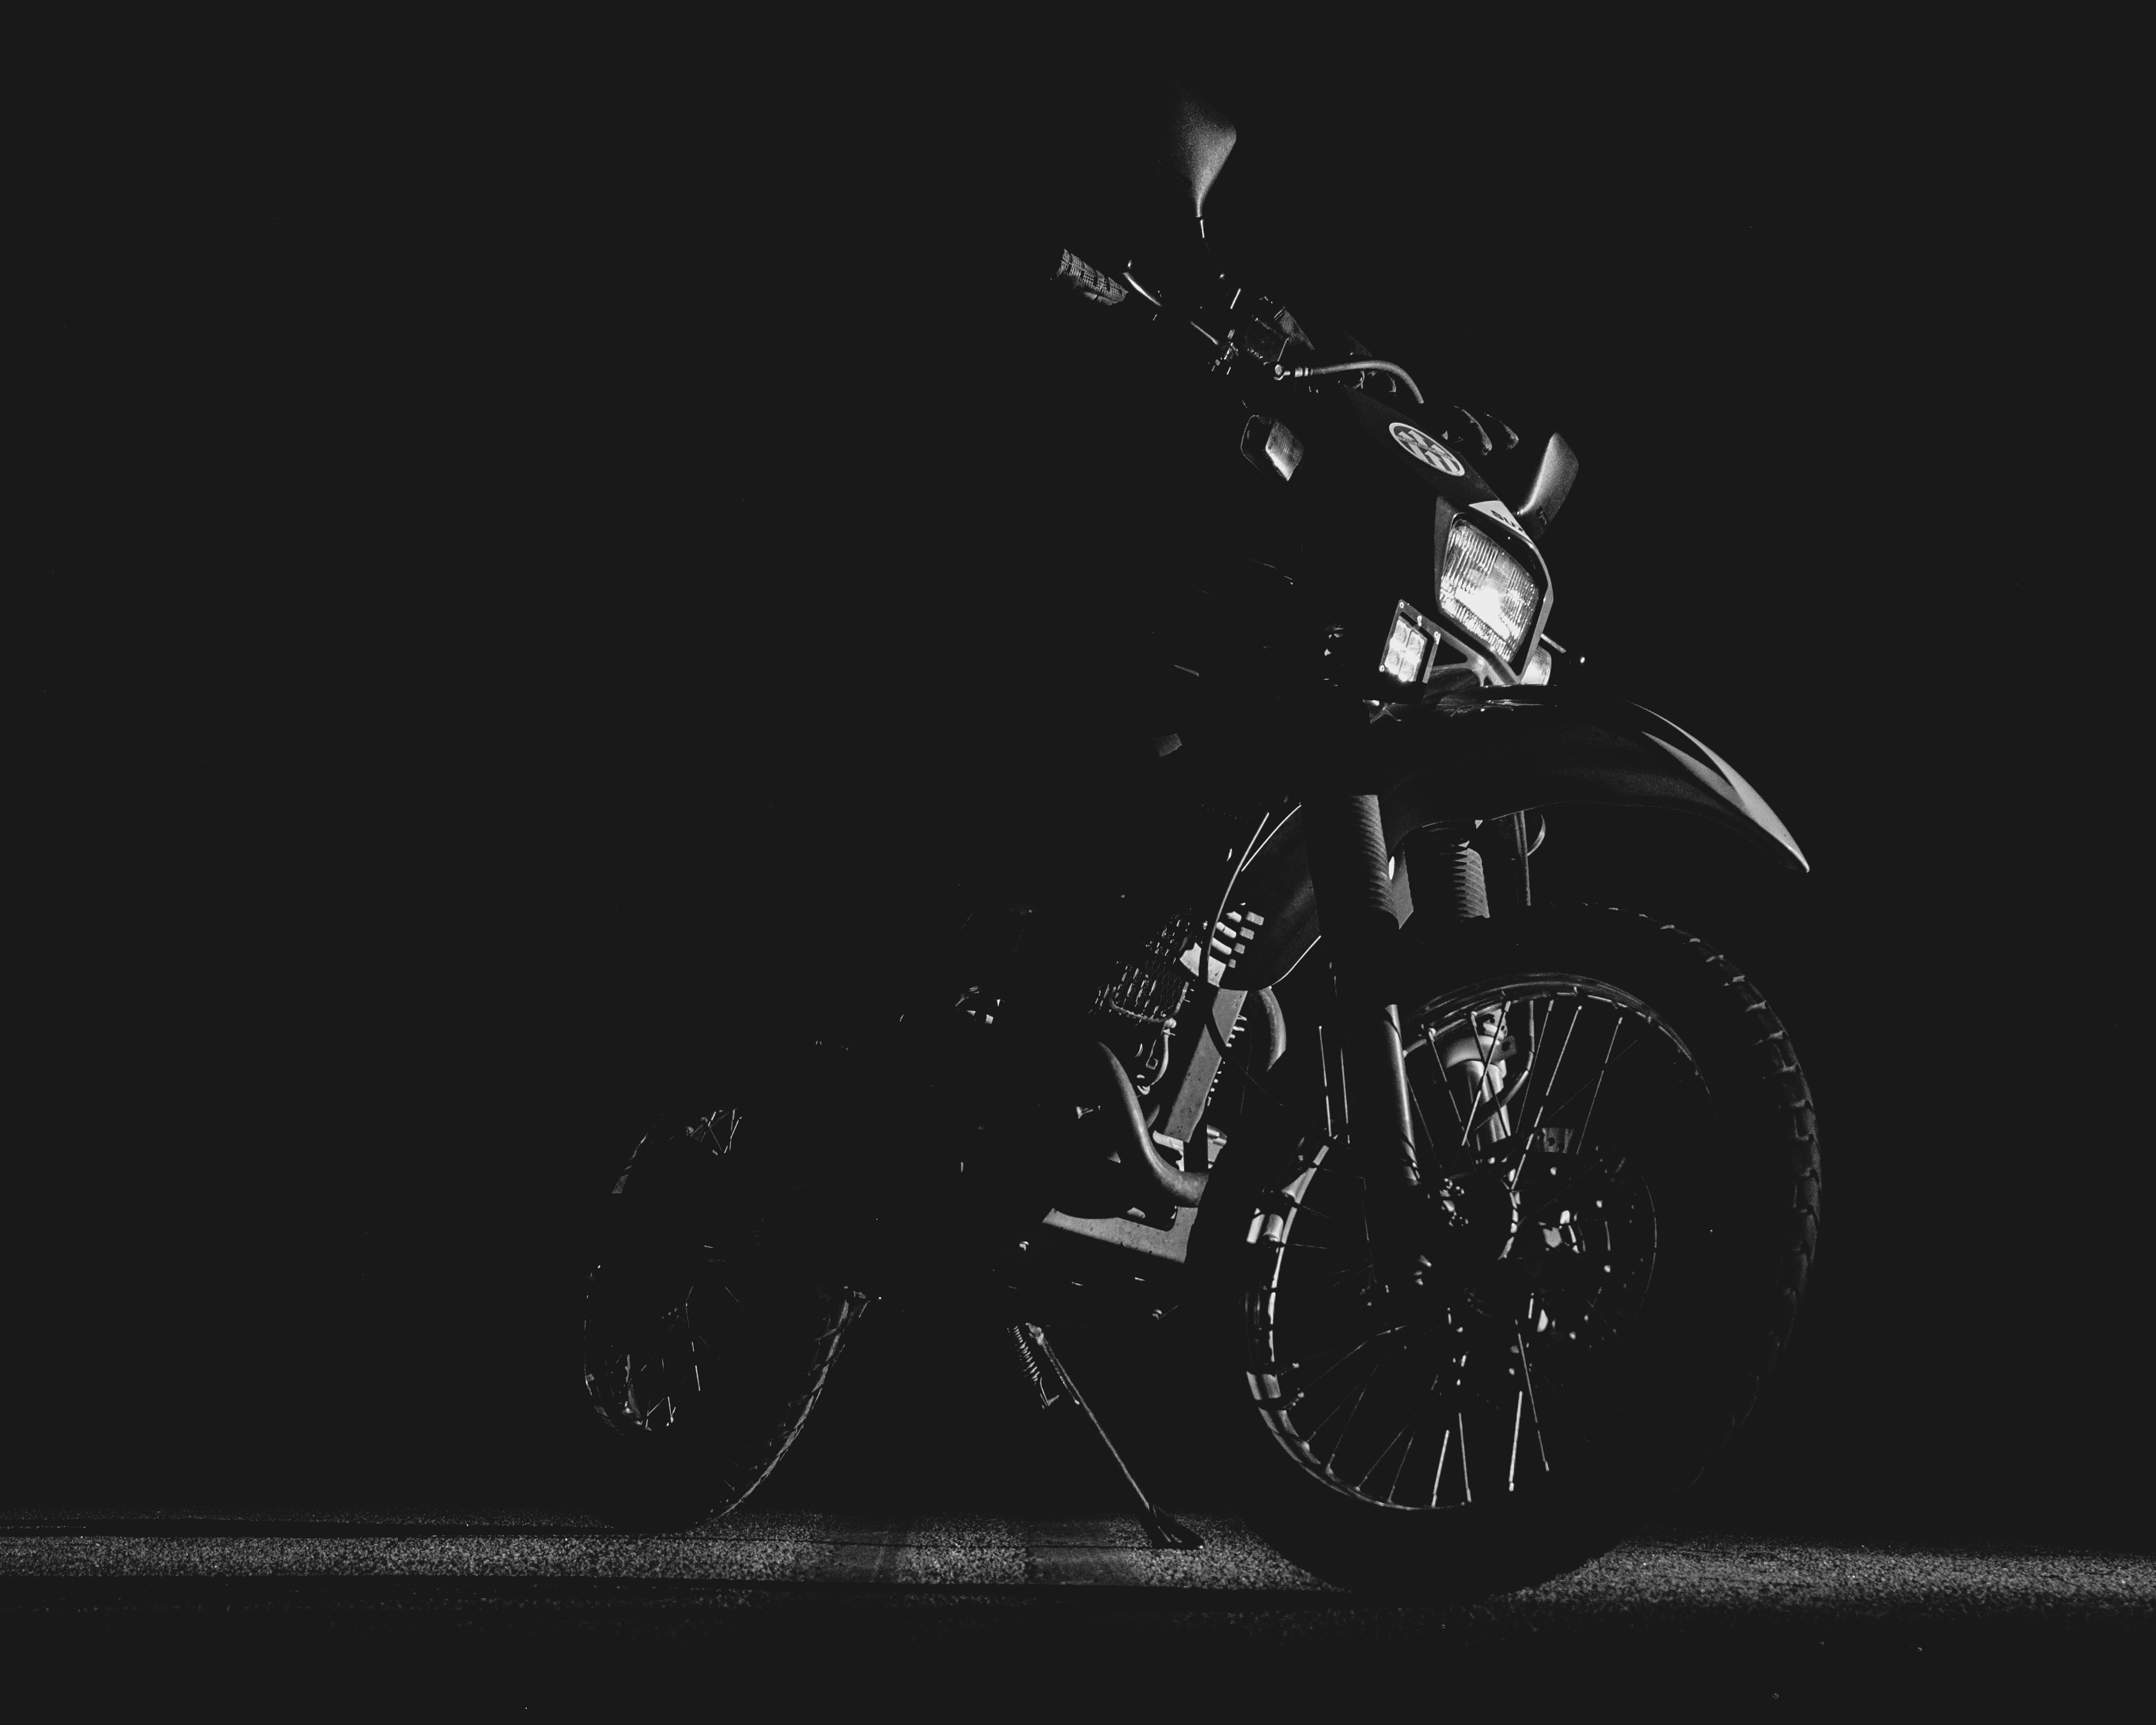 bw, steering wheel, motorcycle, motorcycles, darkness, chb, wheel, rudder lock screen backgrounds